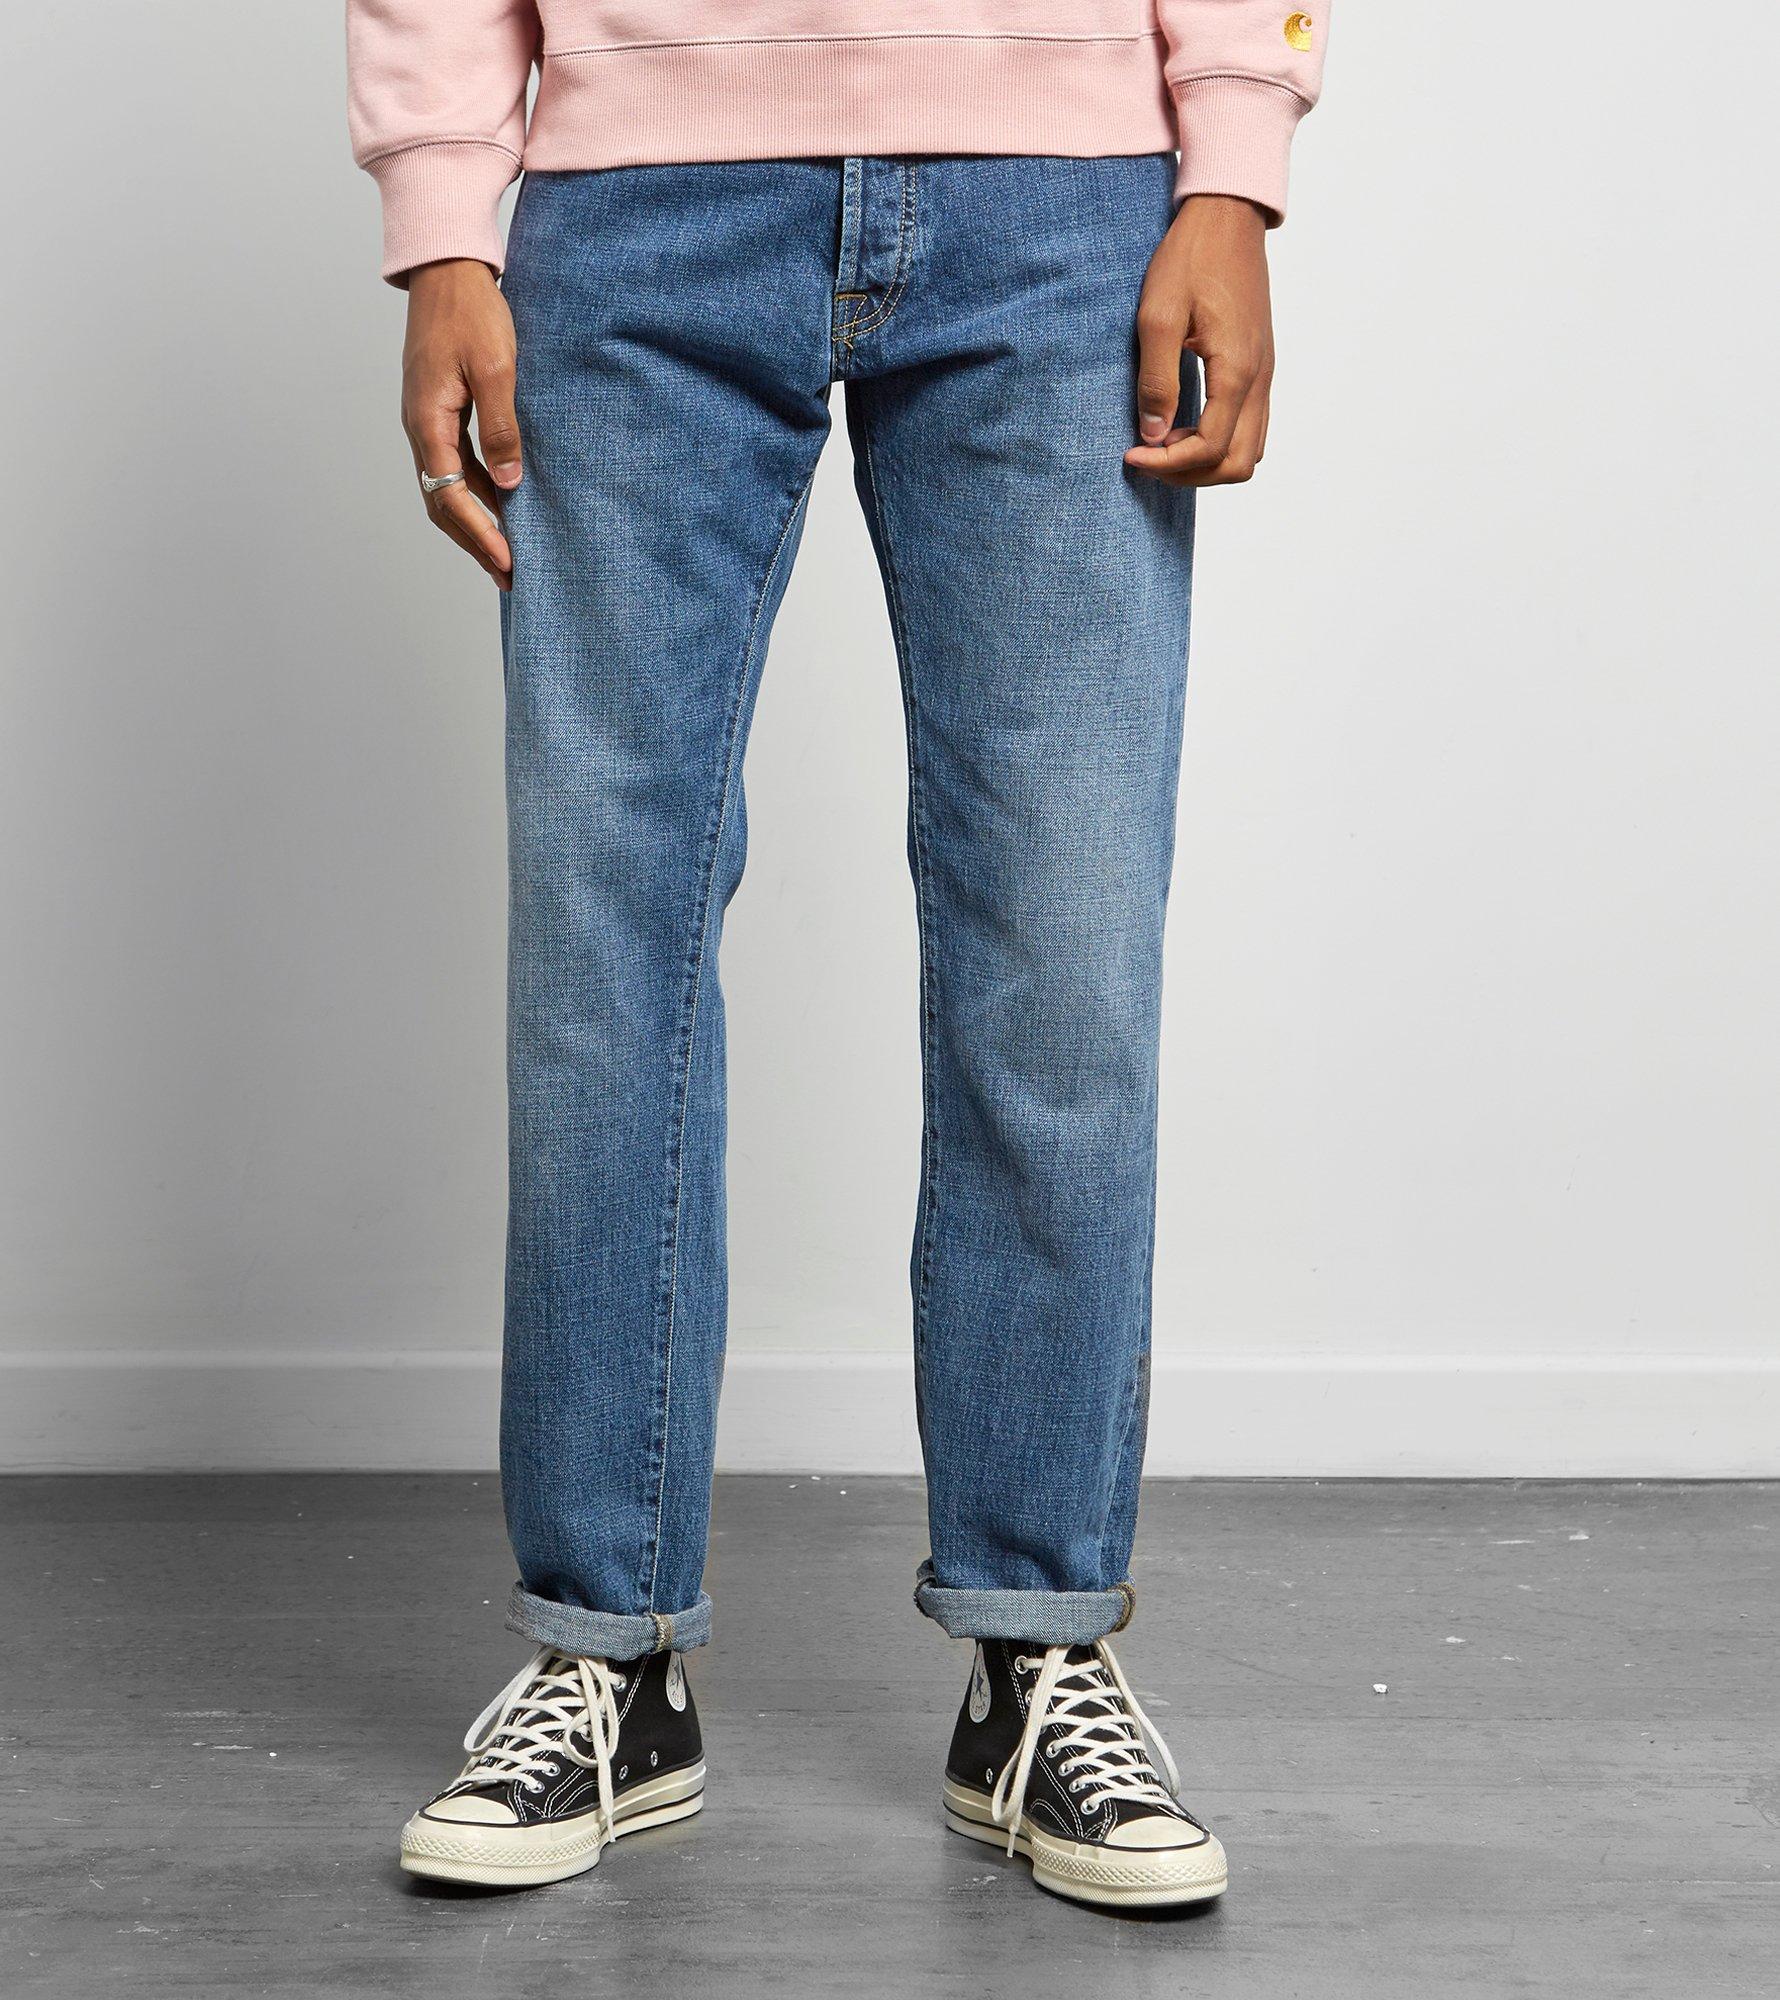 Carhartt WIP Denim Klondike Selvedge Jeans in Blue for Men - Lyst